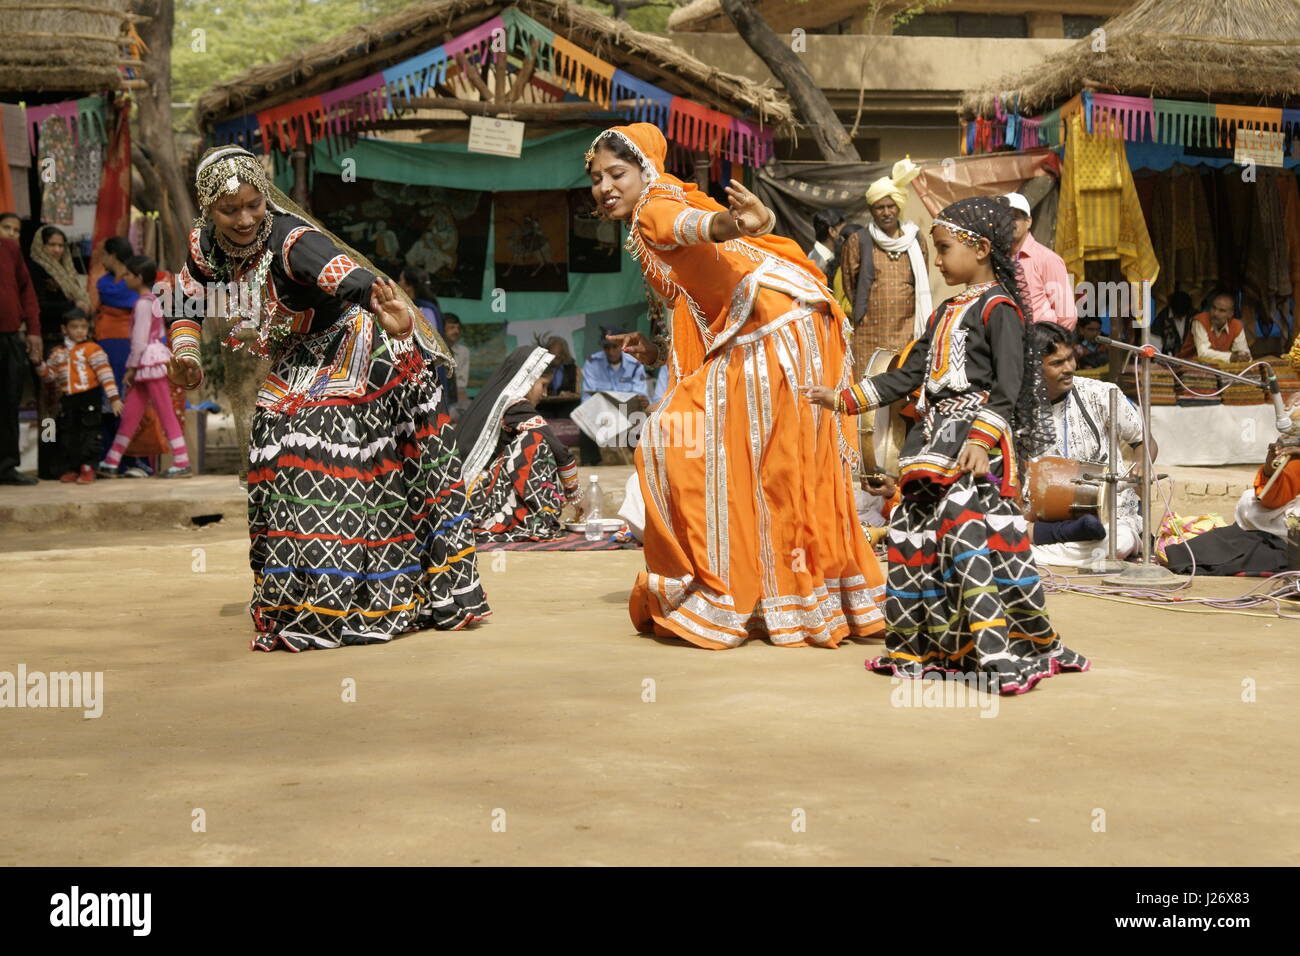 Group of Kalbelia dancers from Rajasthan performing at the Sarujkund Fair near Delhi, India. Stock Photo